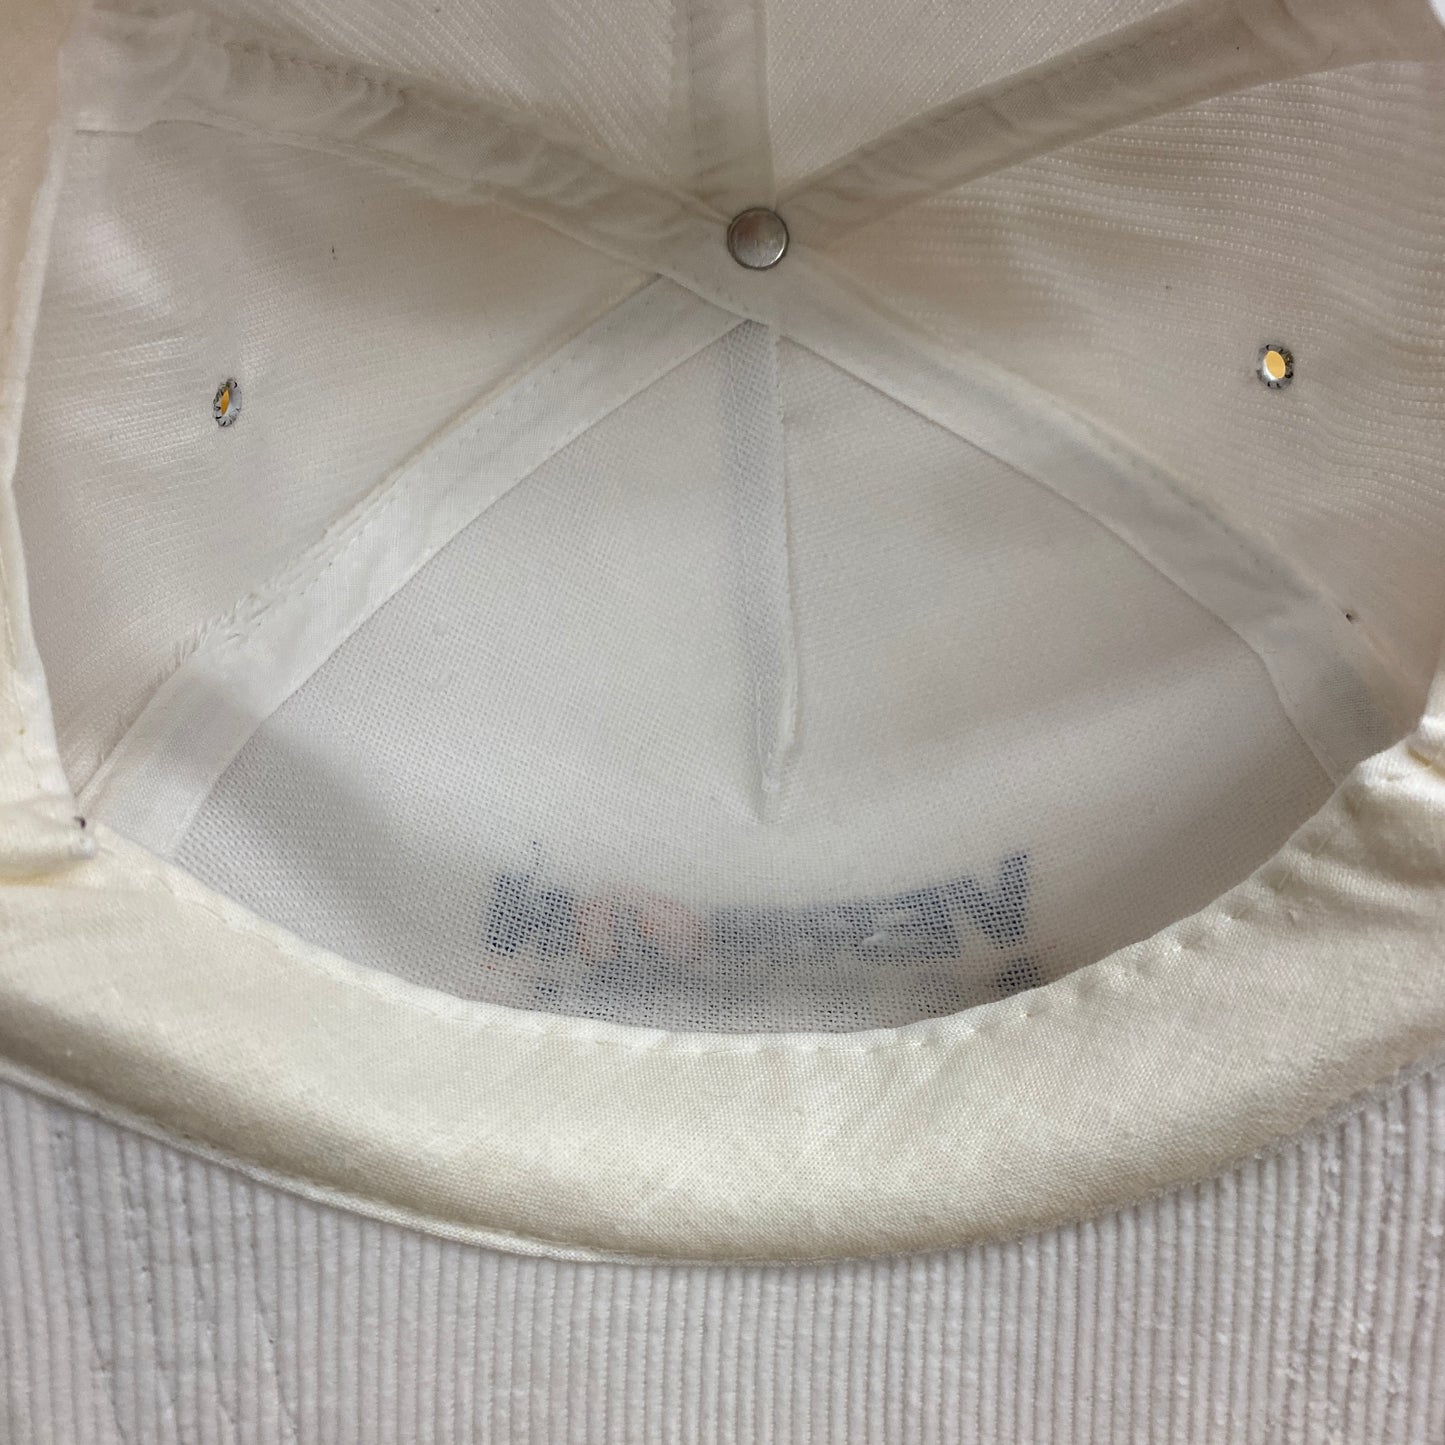 1990s Vernon Downs White Corduroy Snapback Hat